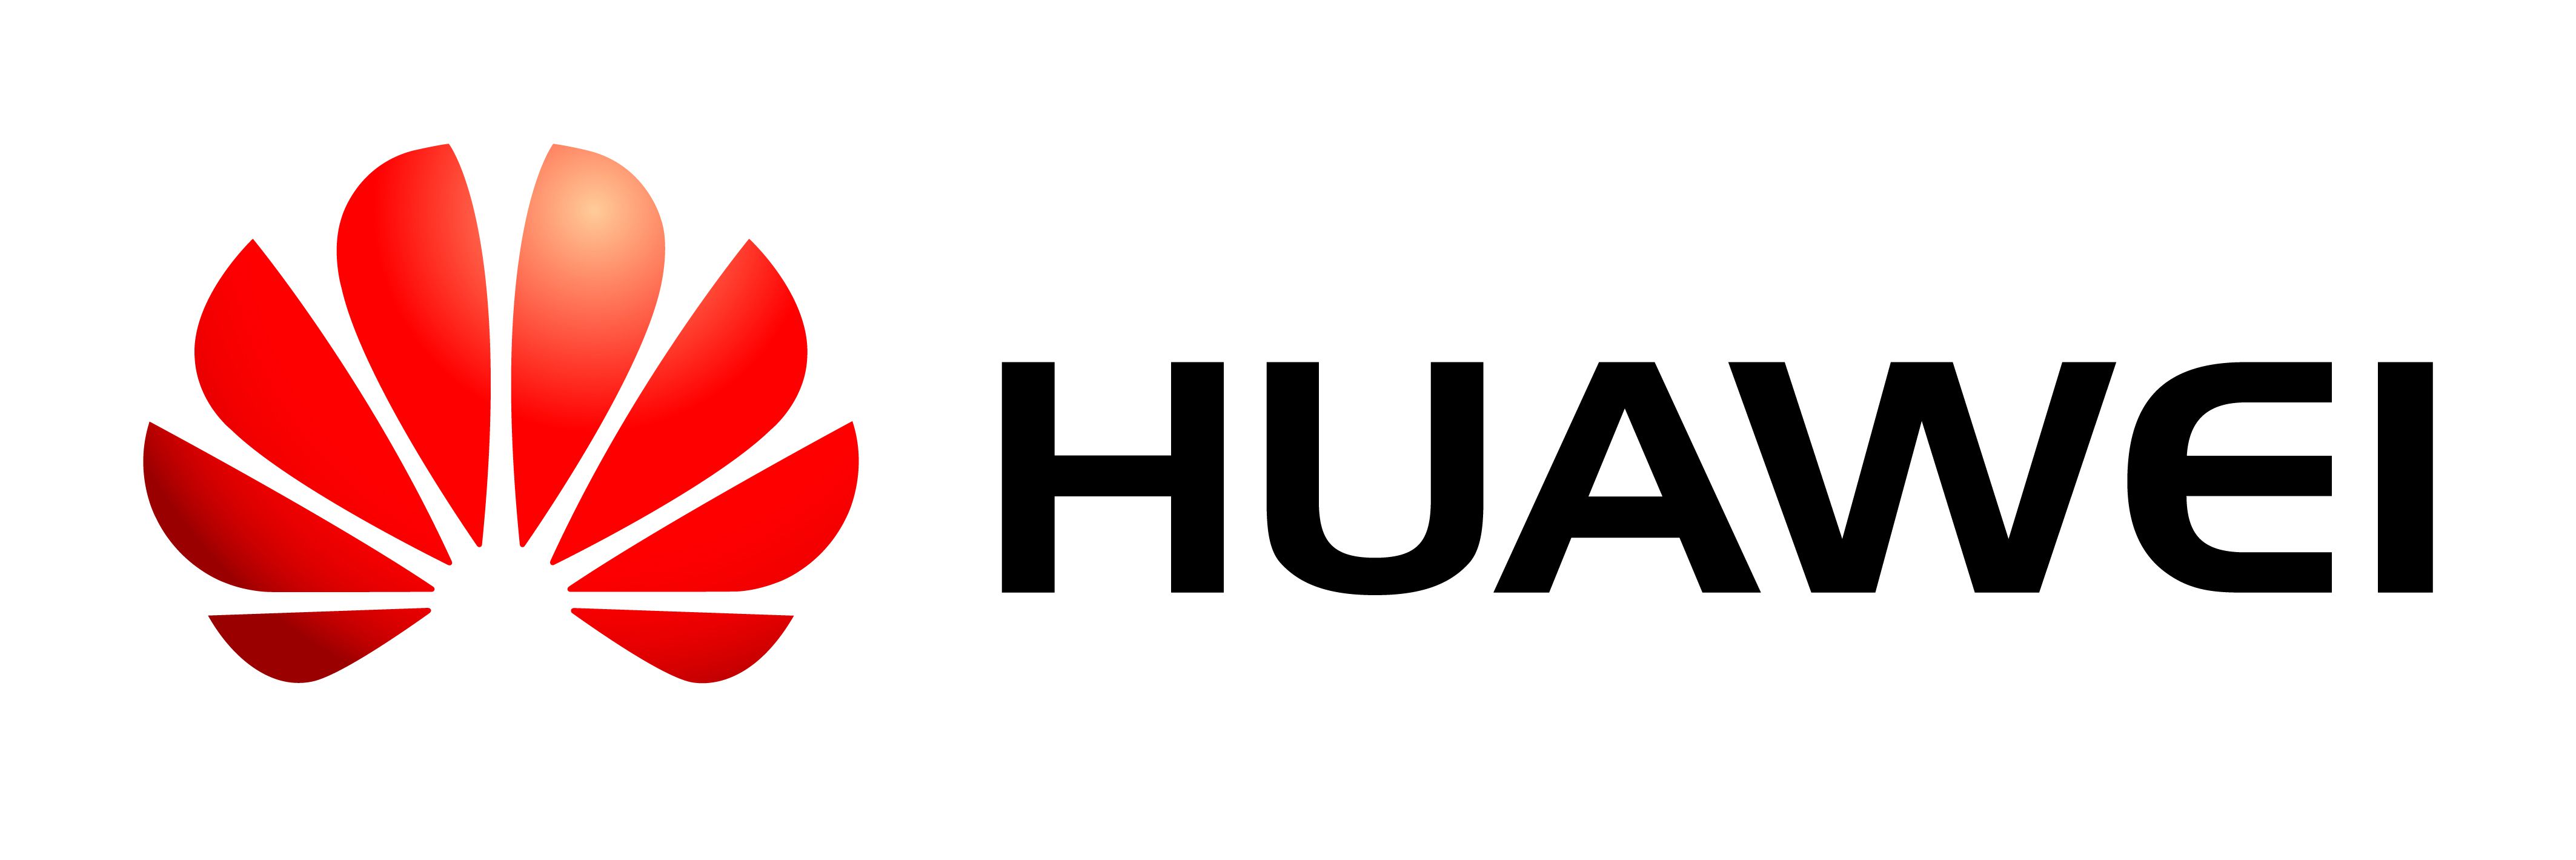 Встраиваемый компьютер Huawei IdeaHub OPS для IdeaHub, Ci7-8700, 16Gb RAM, 256Gb SSD, W10 SAC (02313FMB)